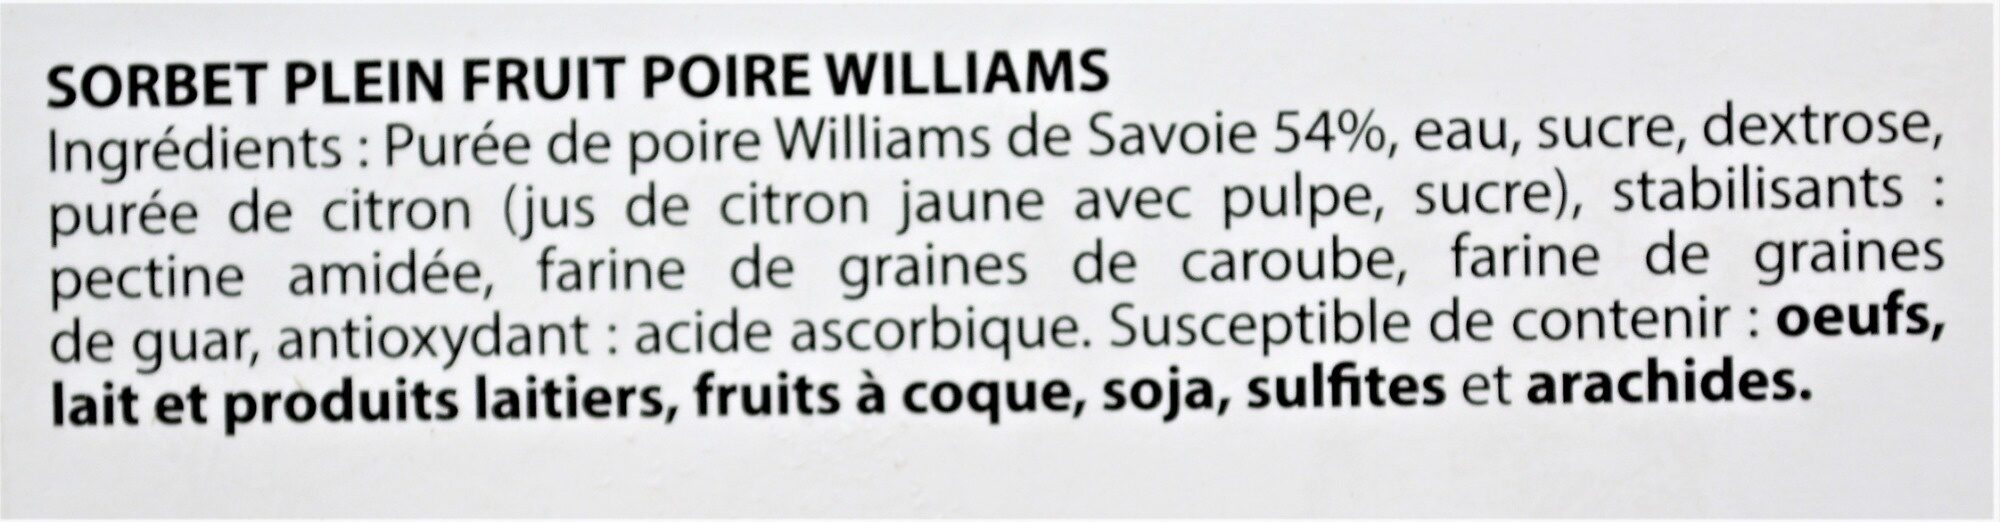 Sorbet plein fruit POIRE WILLIAMS, 54% de fruit - Ingredients - fr